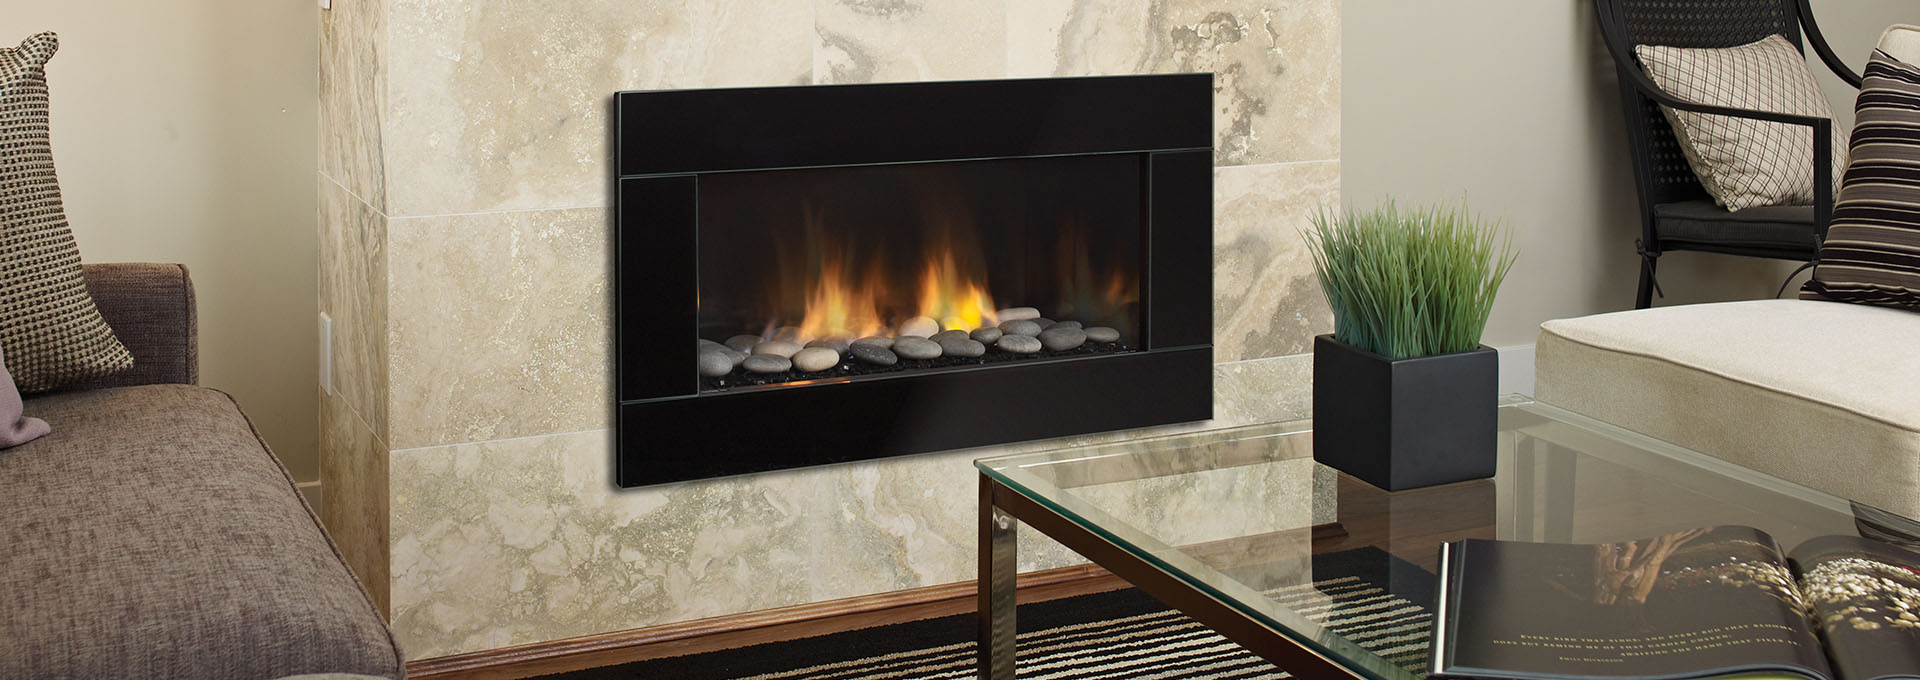 Napoleon Direct Vent Gas Fireplace New Fireplaces toronto Fireplace Repair & Maintenance